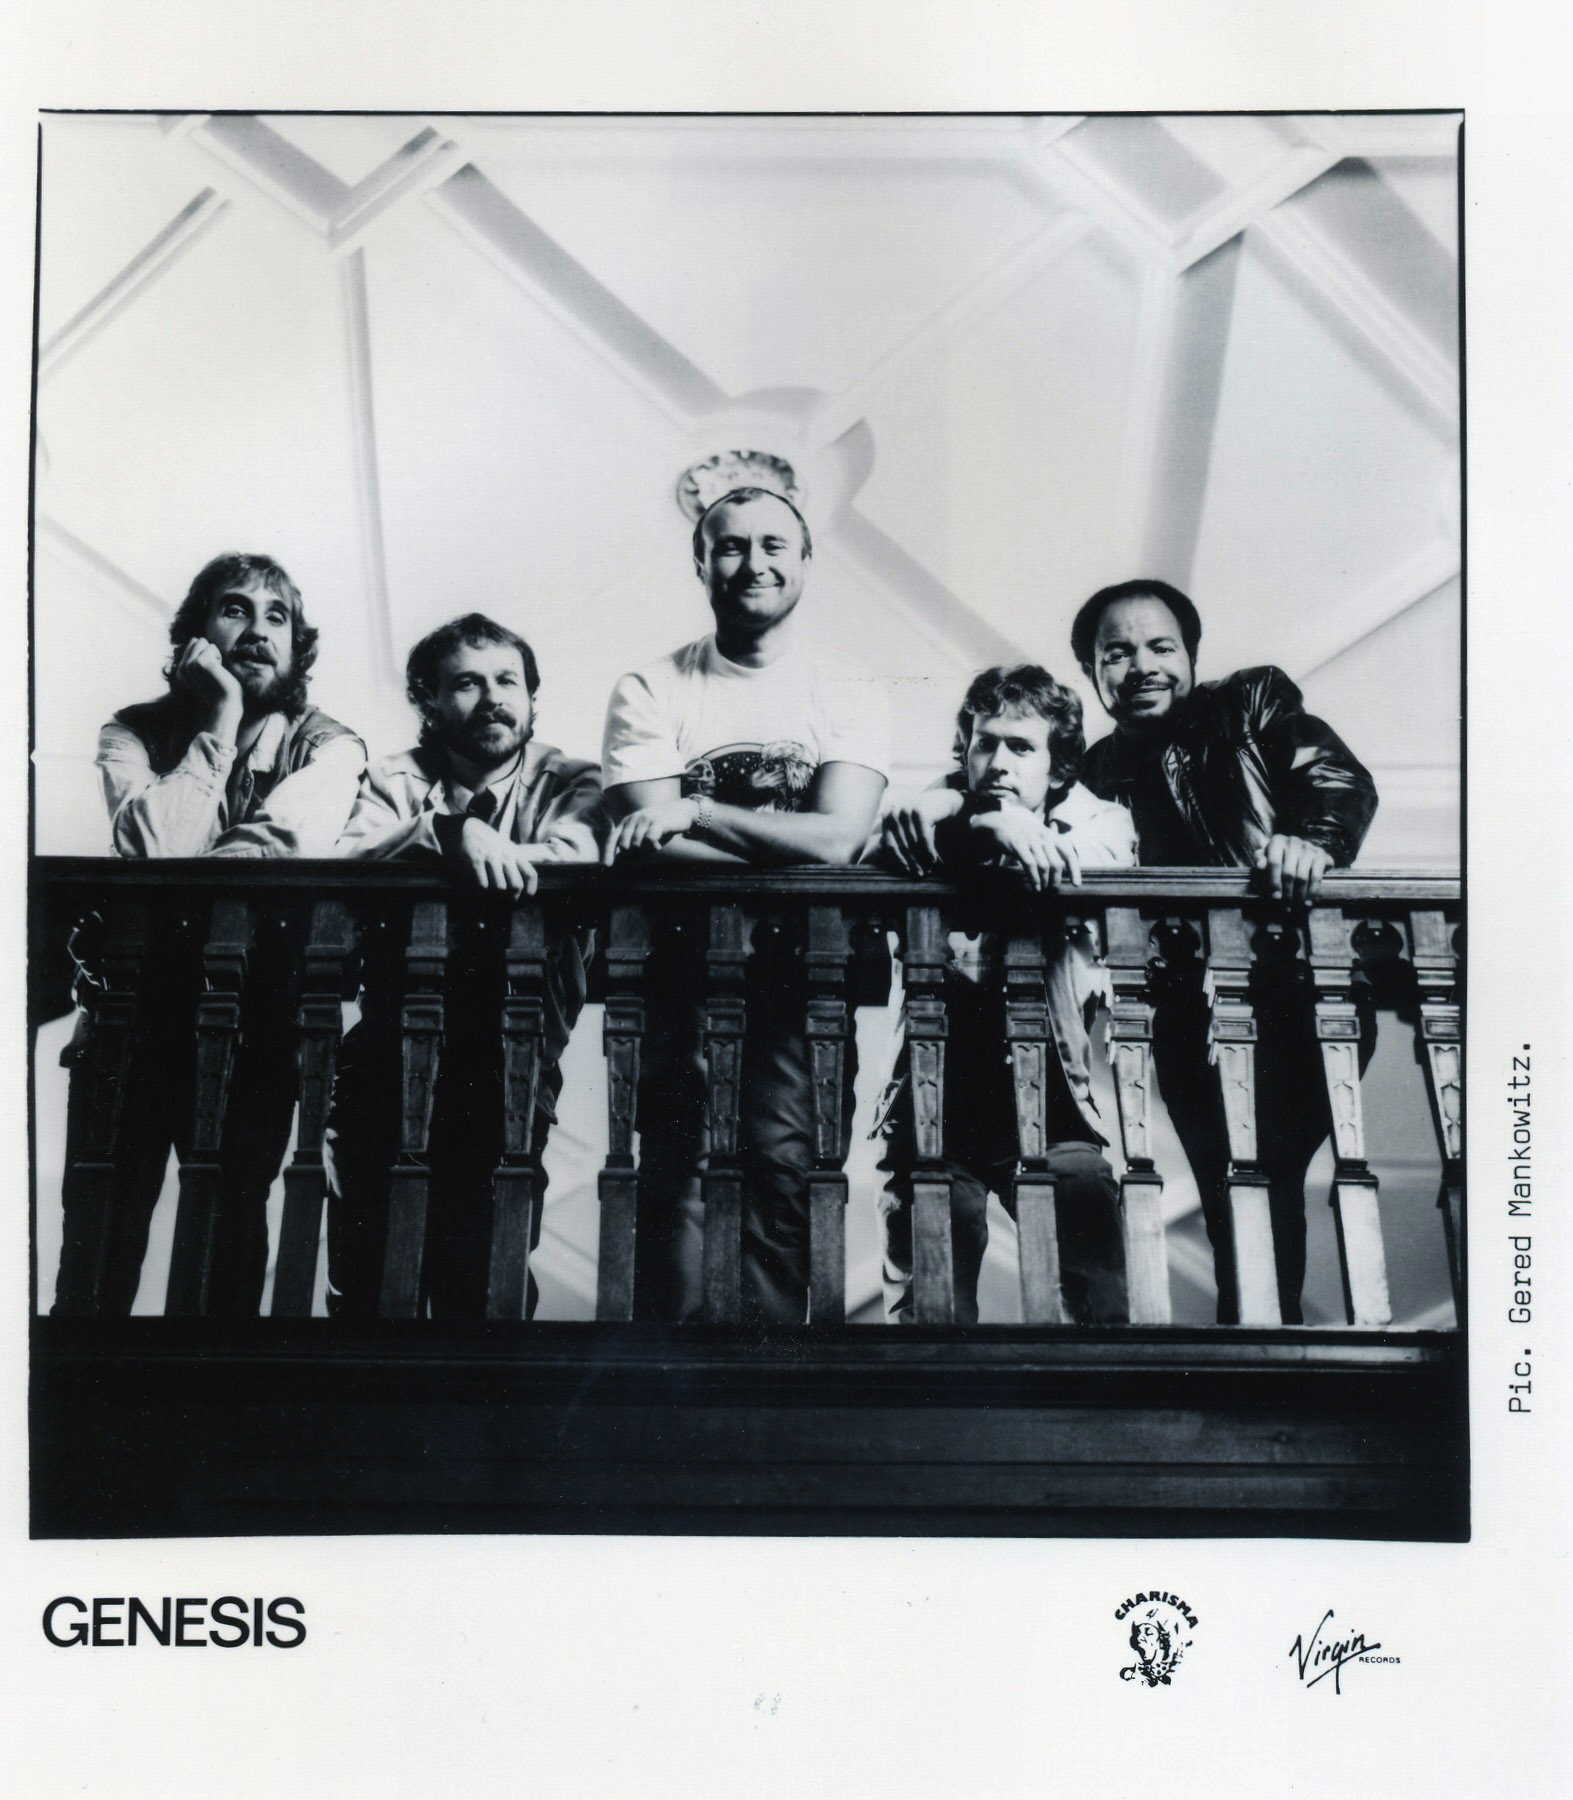 genesis three sides live tour dates